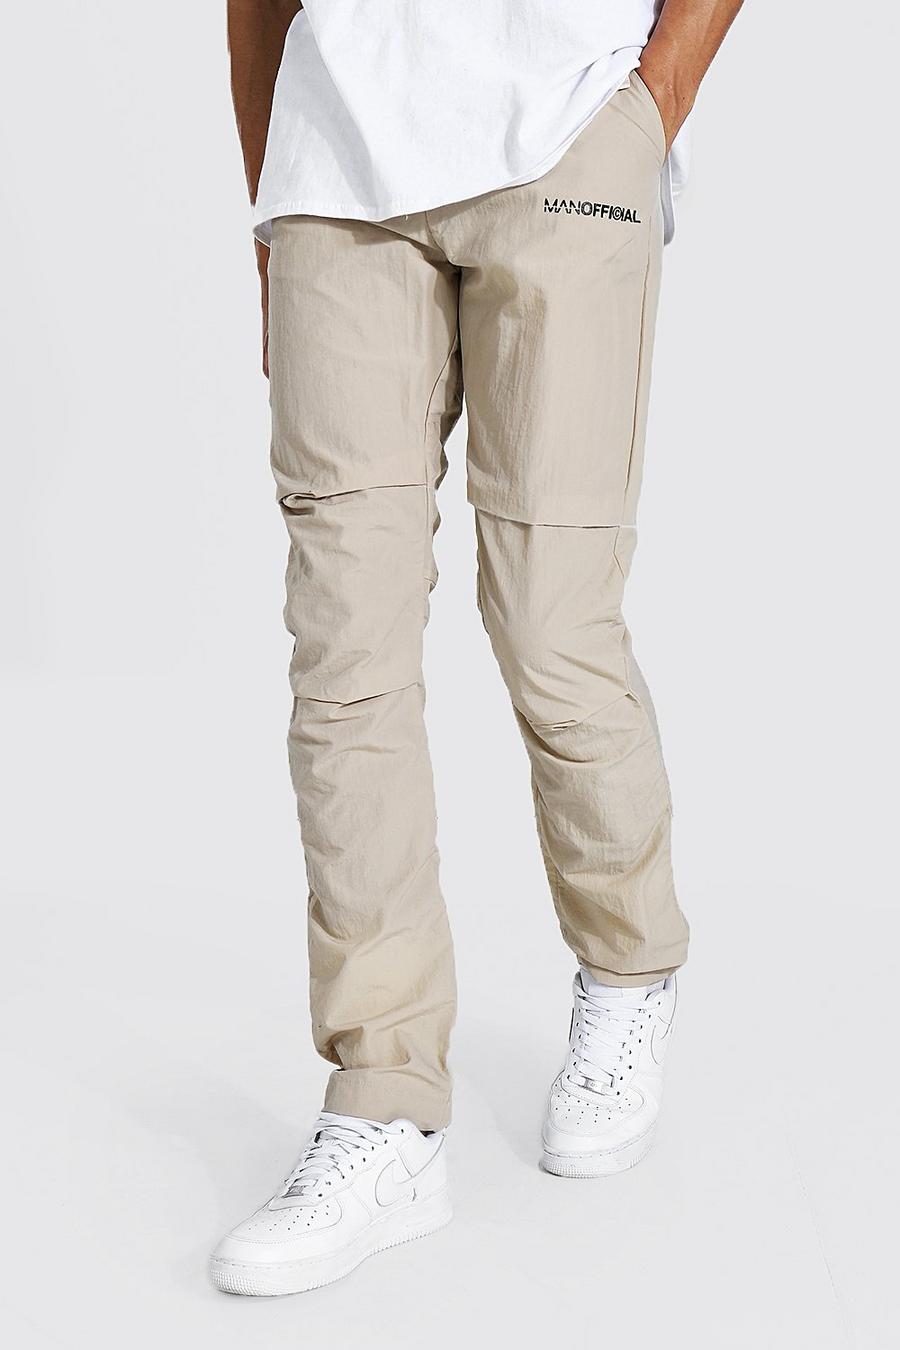 Pantaloni cargo Tall effetto stropicciato con scritta Man Official, Écru image number 1